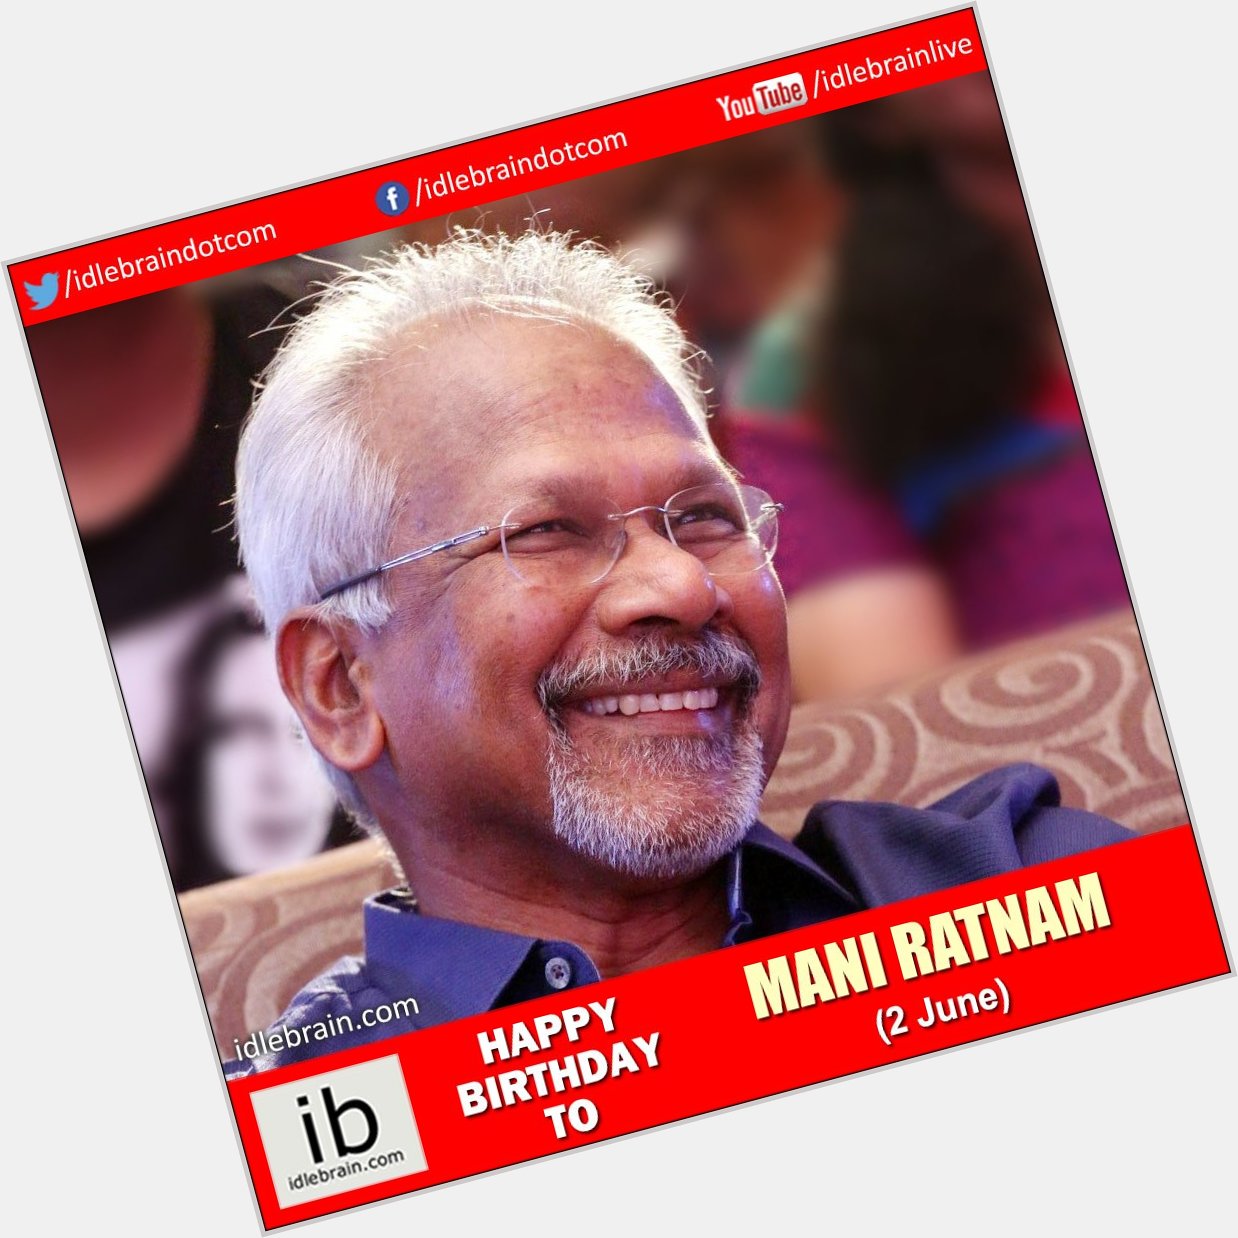 Happy birthday to Mani Ratnam (2 June) -  